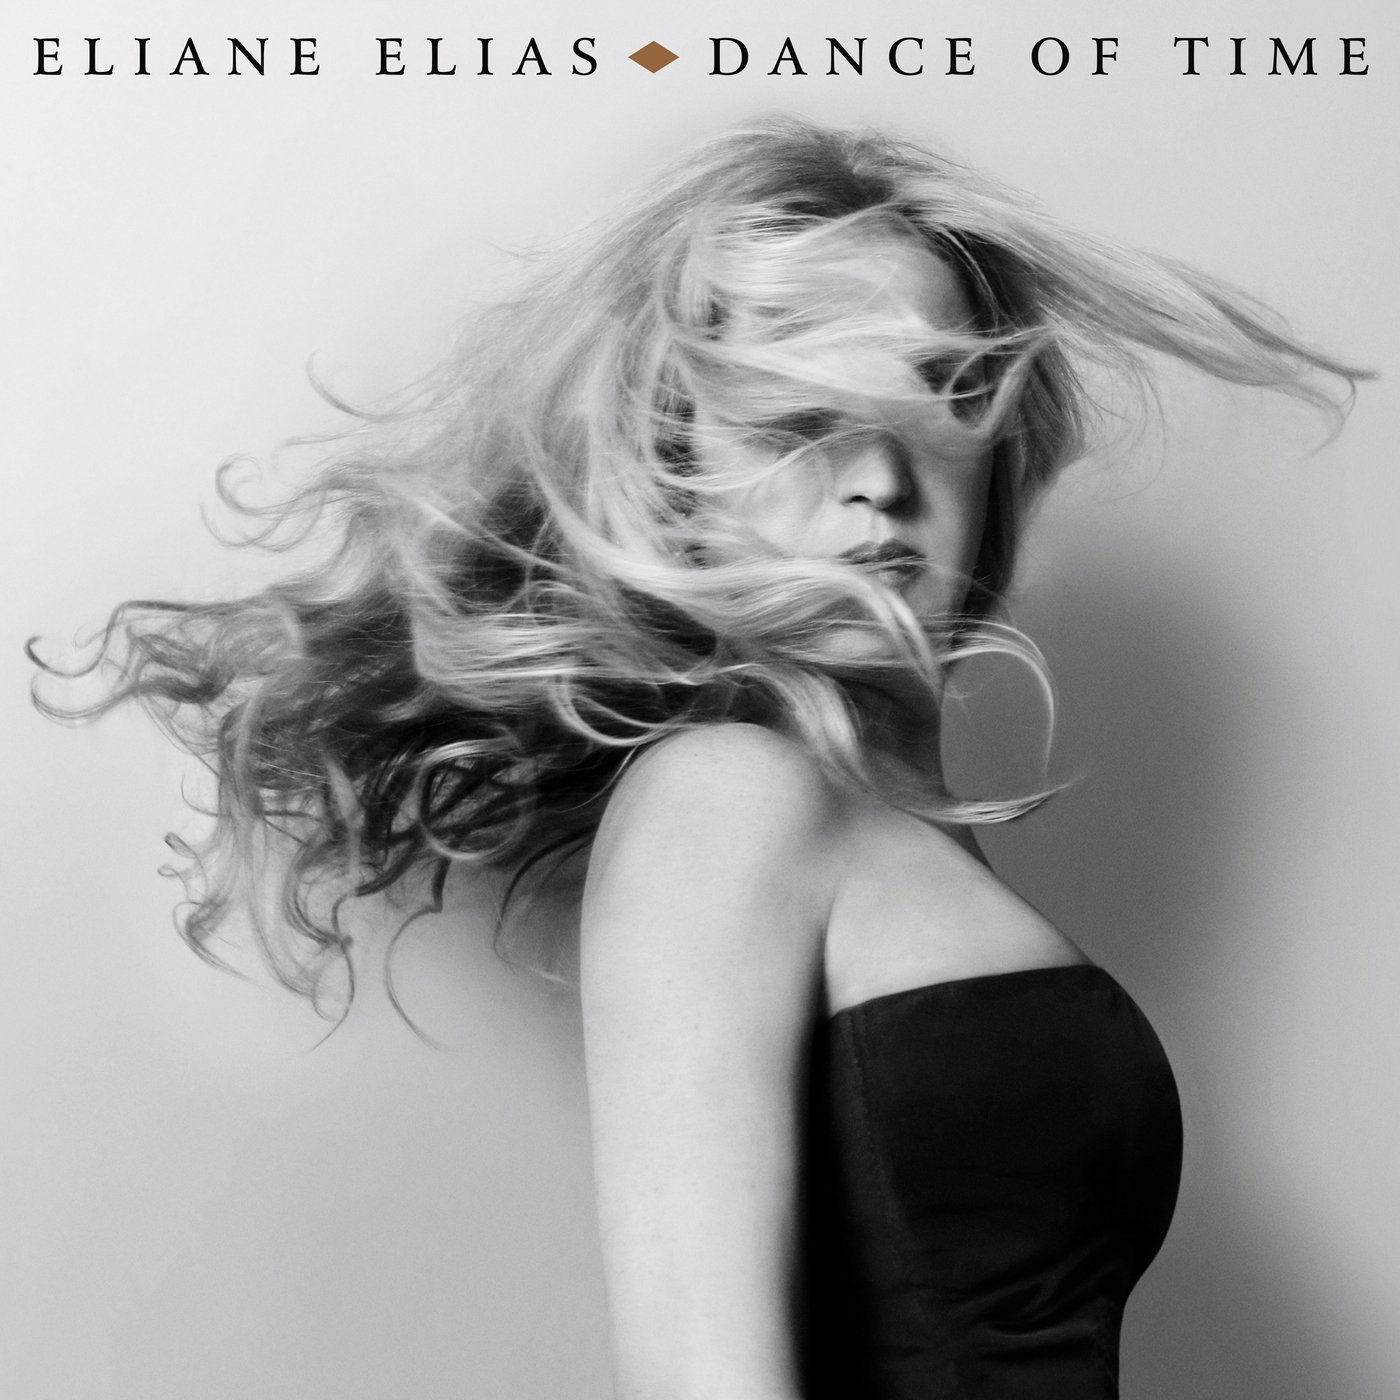 Eliane Elias - Dance Of Time (2017) [HDTracks FLAC 24bit/96kHz]